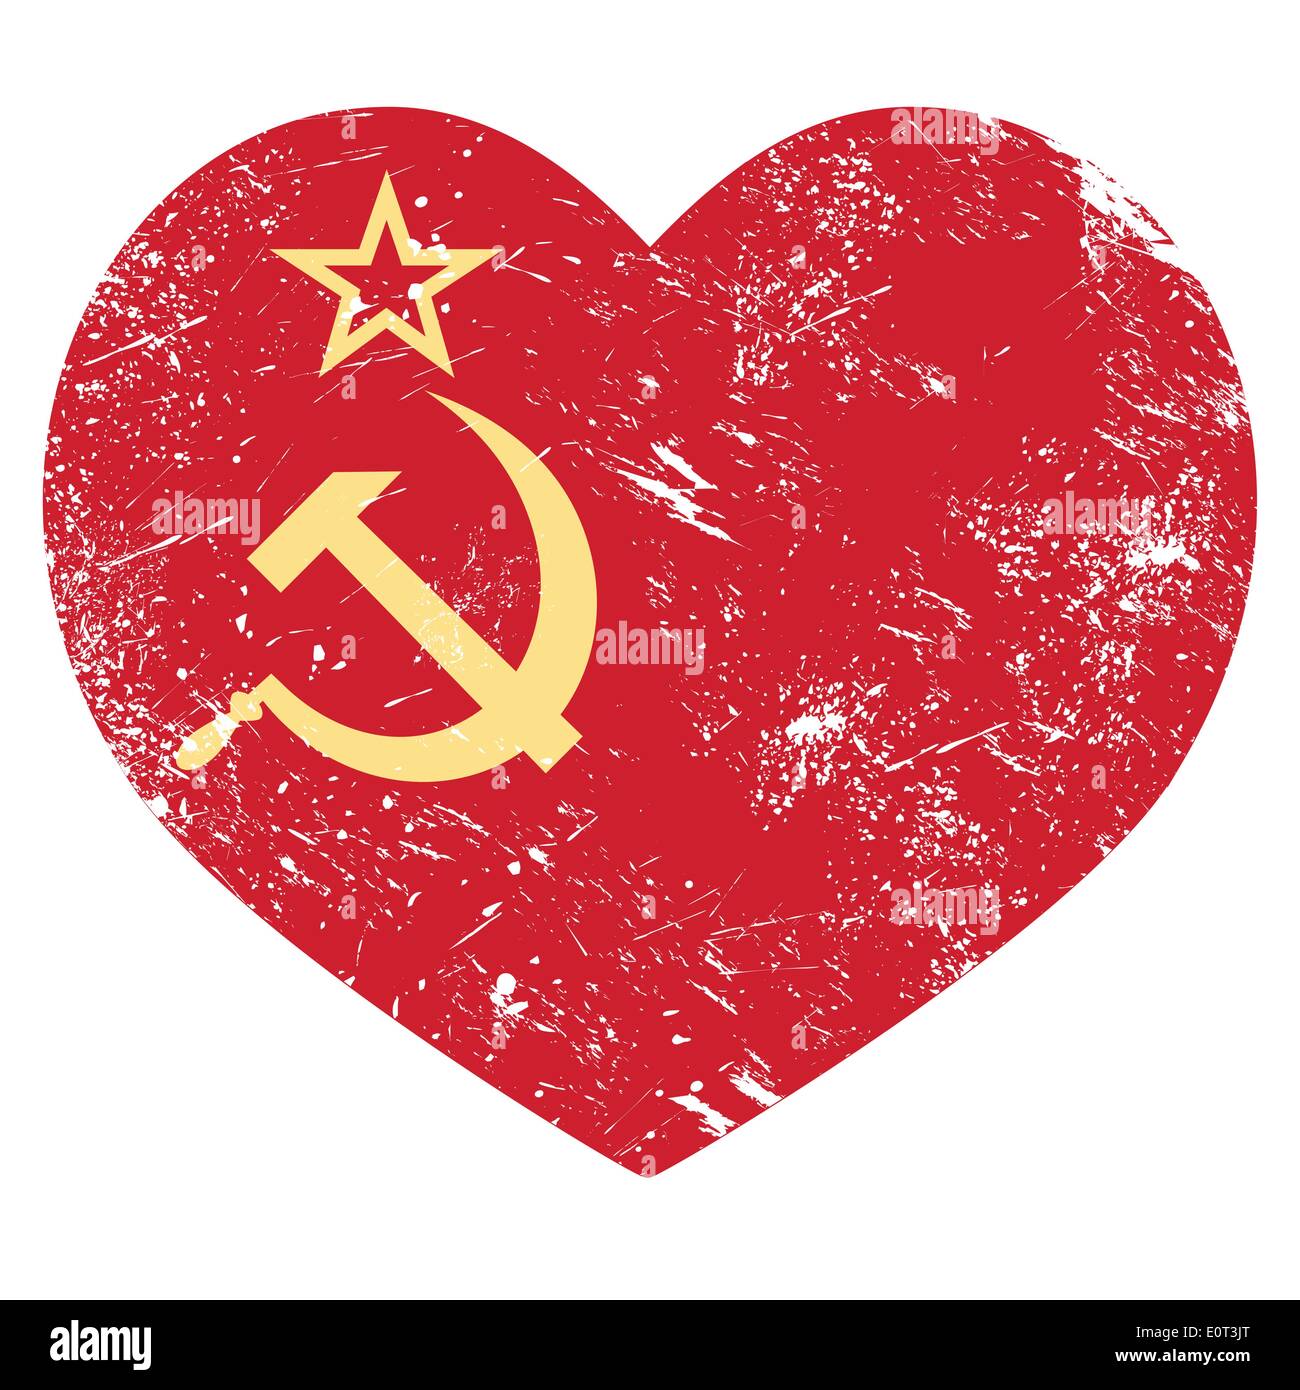 Kommunismus UdSSR - Sowjetunion retro Herzen Flagge Stock Vektor